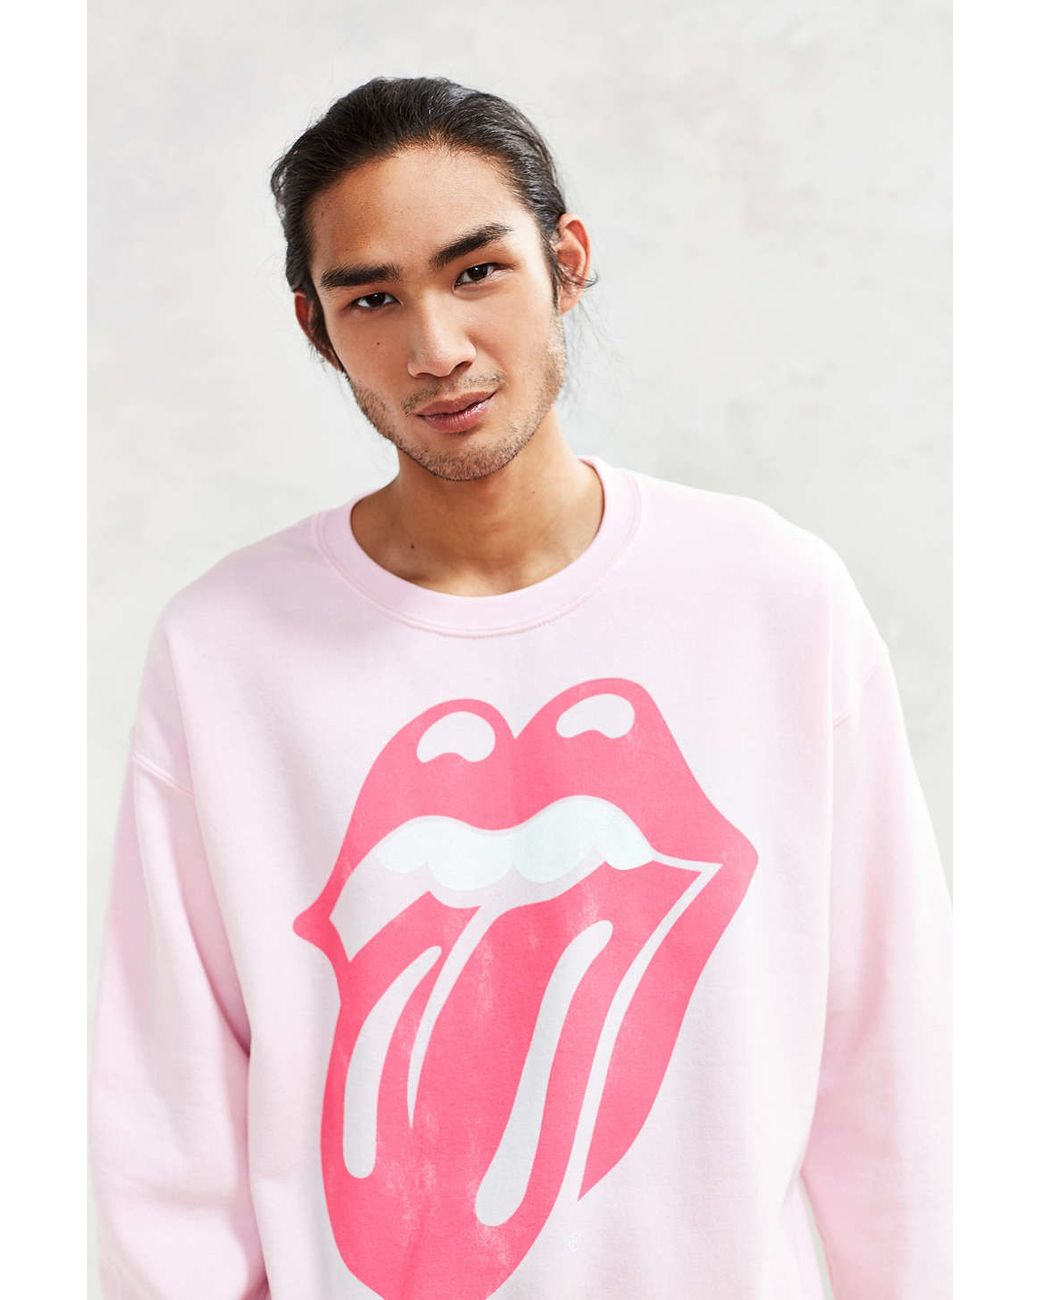 Urban Outfitters Rolling Fleece Crew Neck Sweatshirt in Pink for Lyst